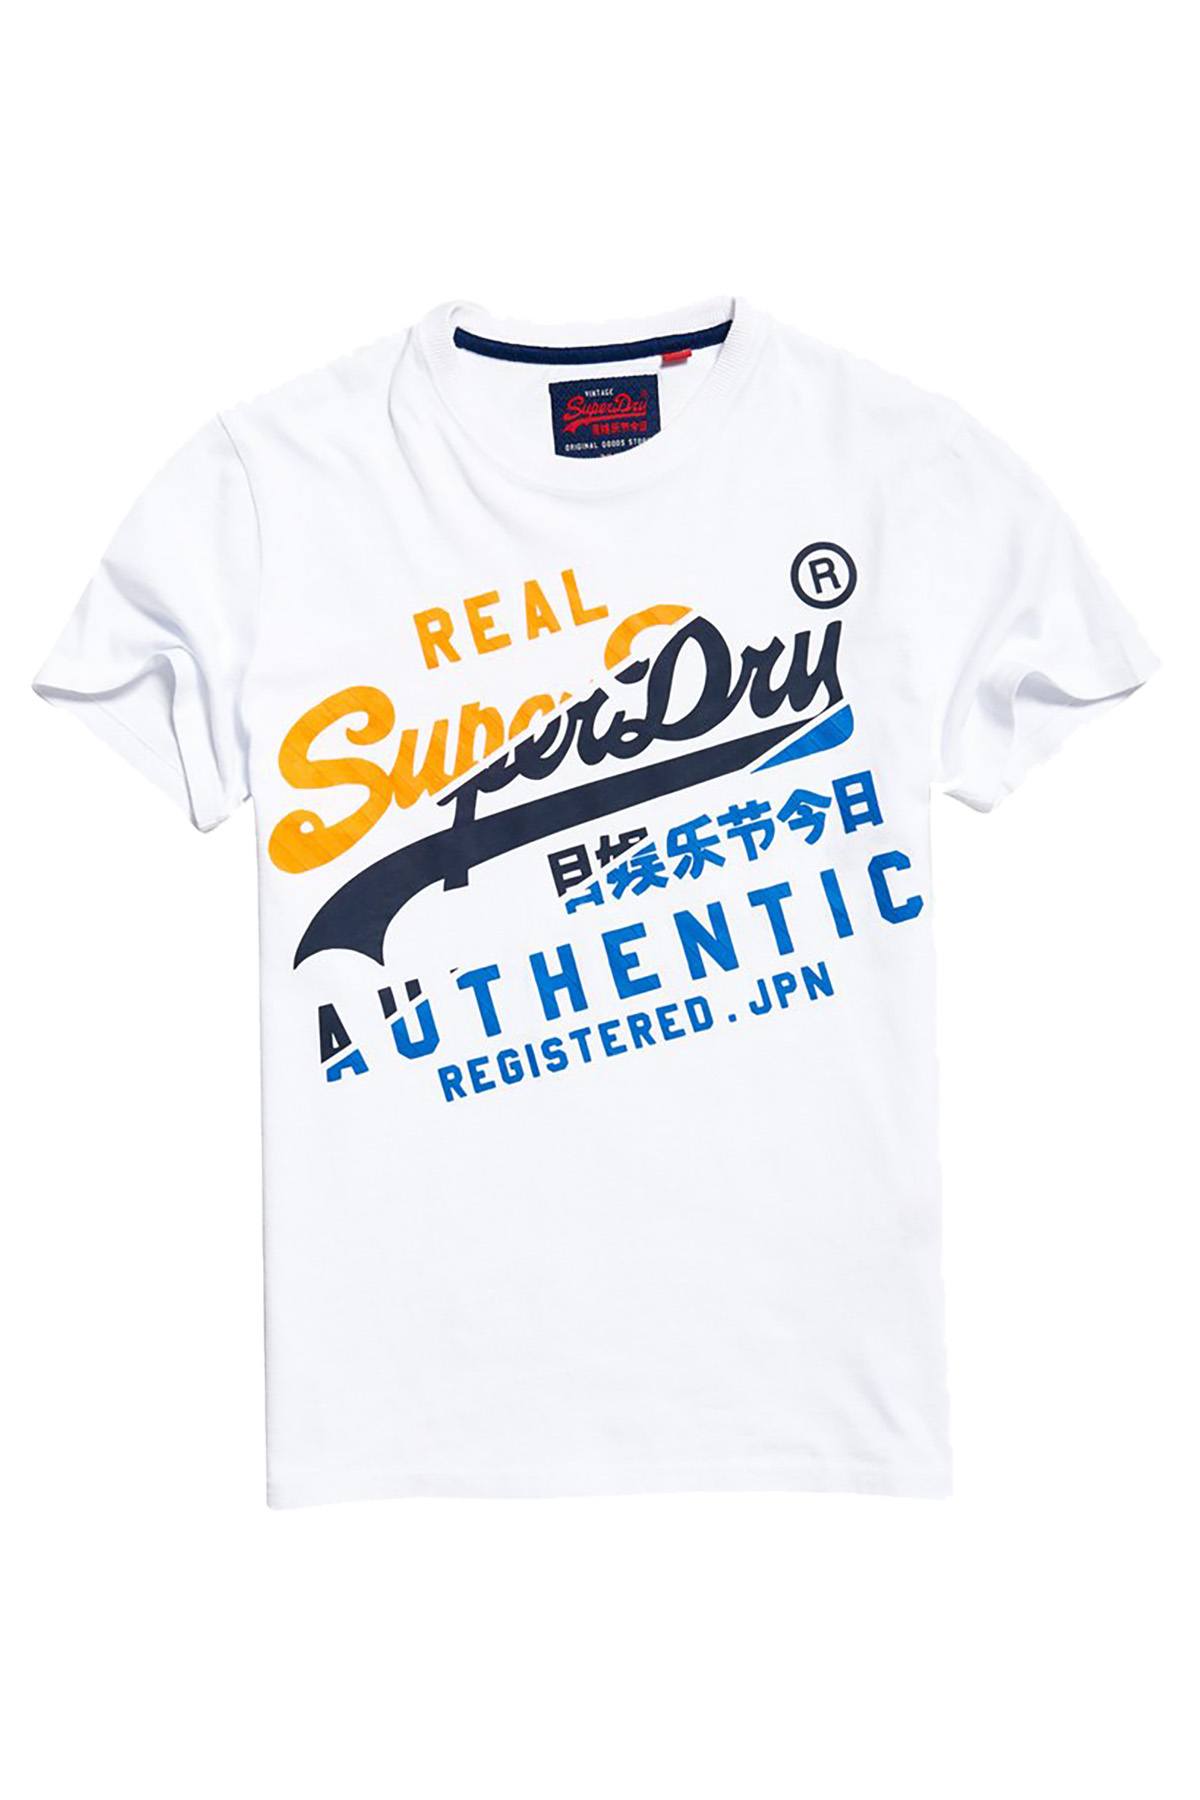 SuperDry Optic-White Vintage Authentic XL T-Shirt